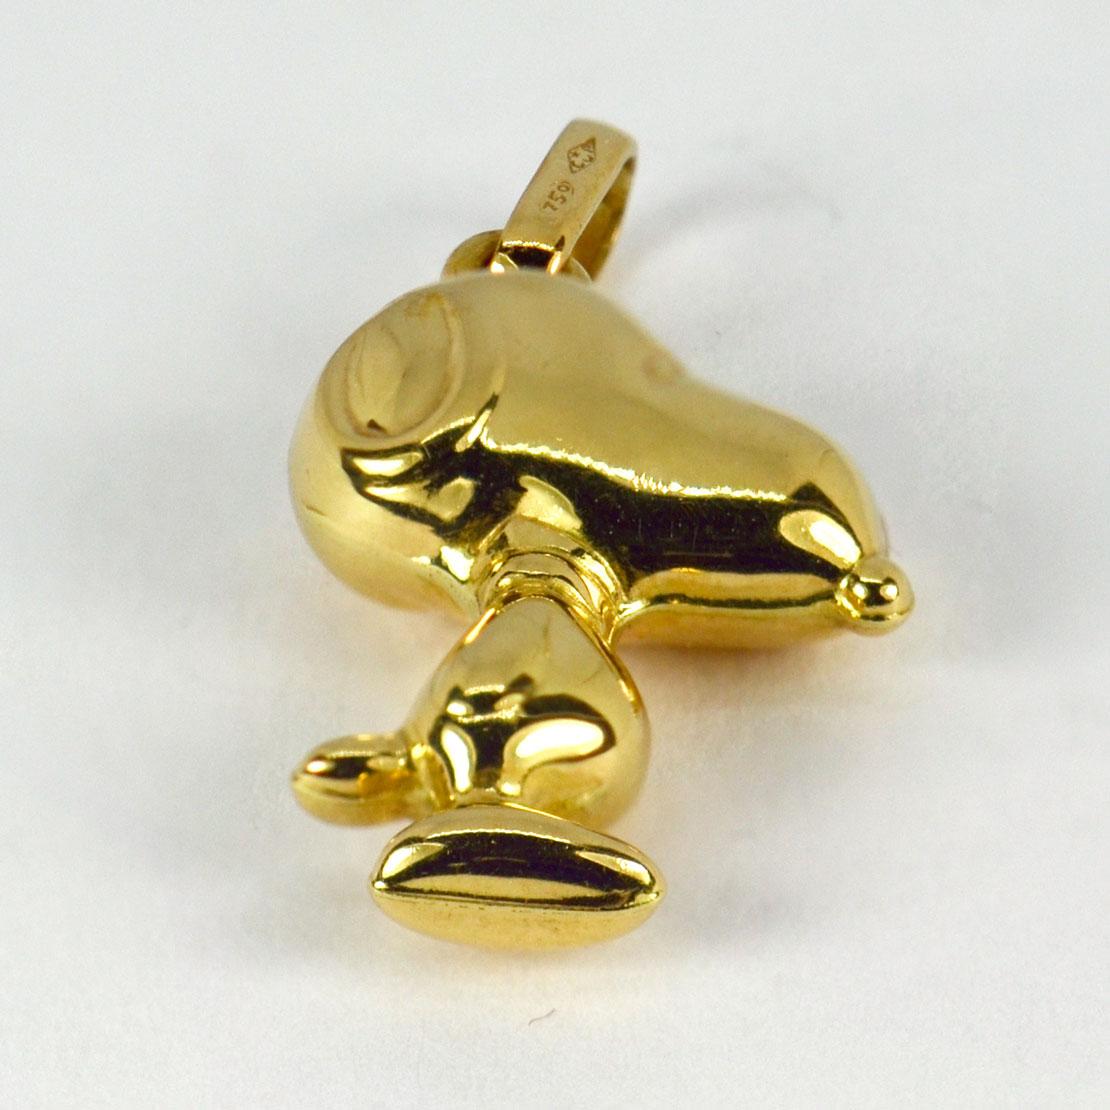 9ct Gold Snoopy Dog Charm Pendant.